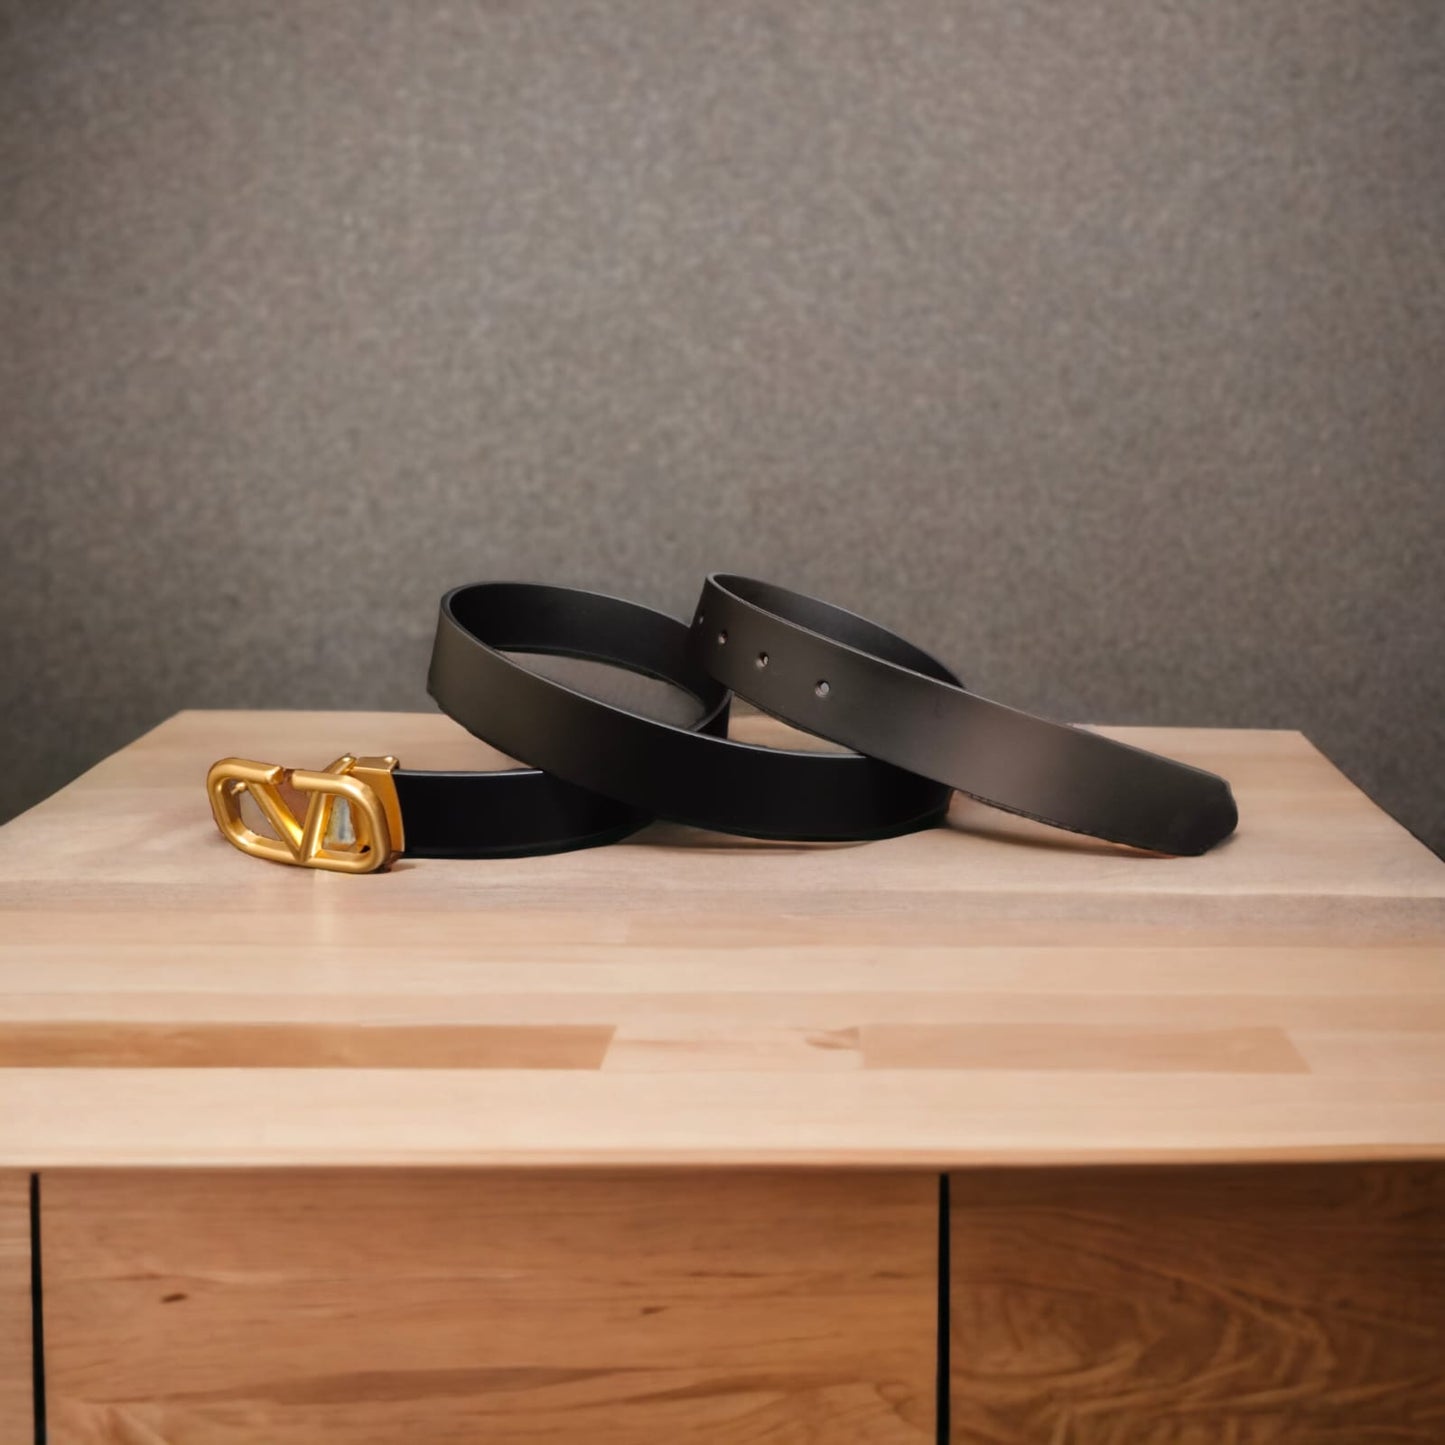 Jack Marc Men's Fashion Black Gold Leather Belt for Office & Casual Wear